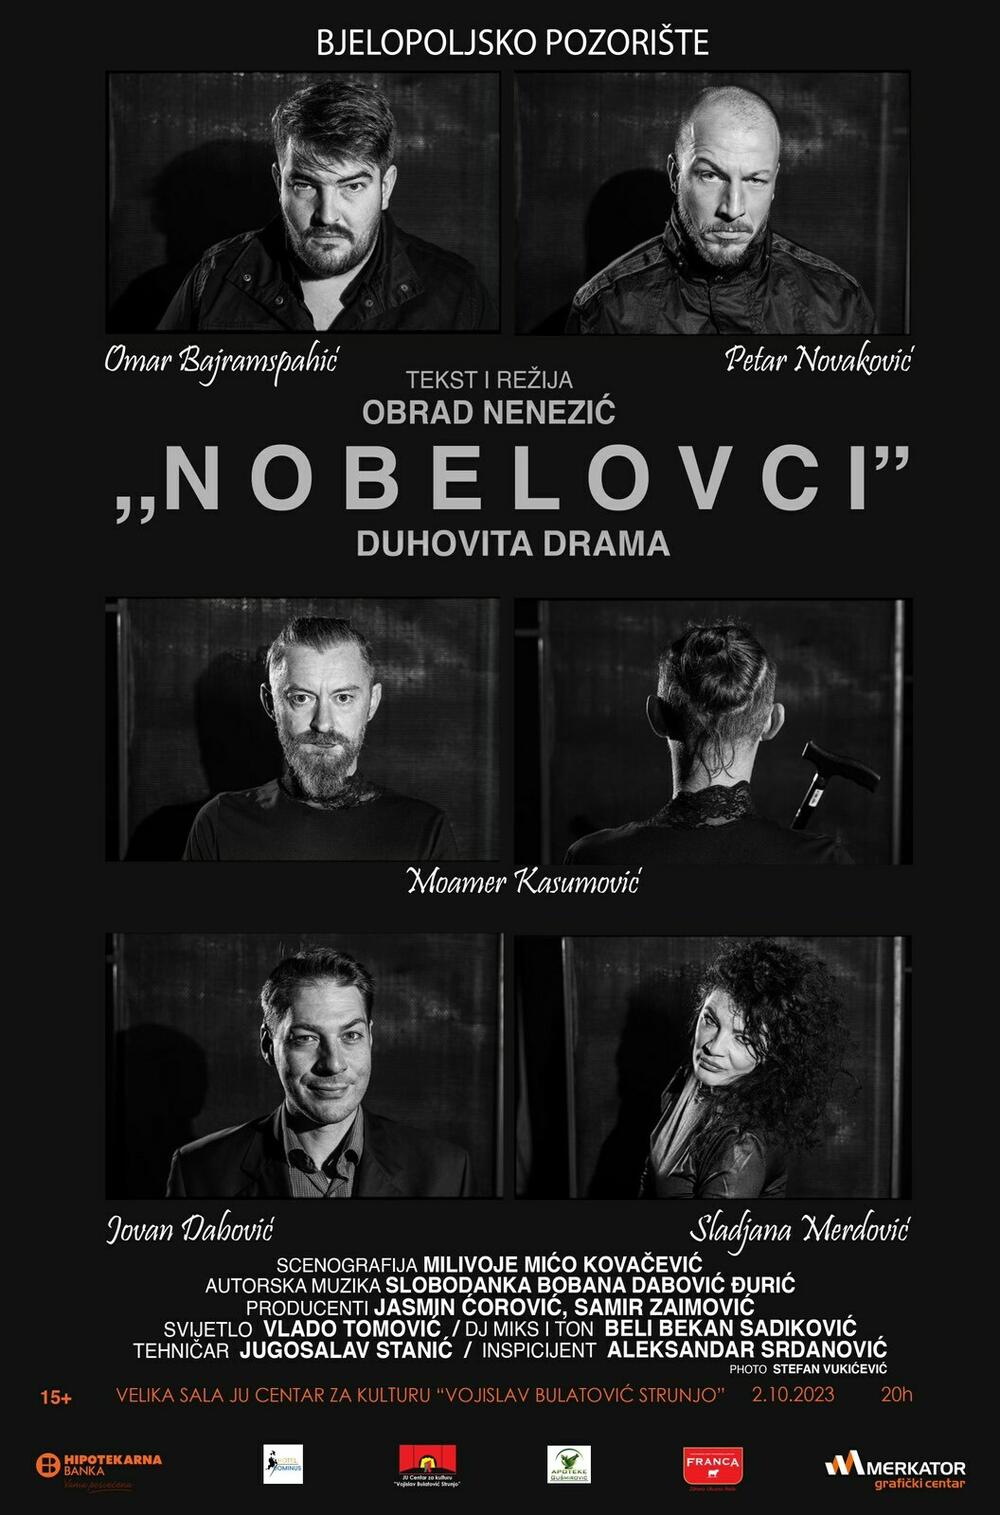 Plakat za predstavu “Nobelovci”